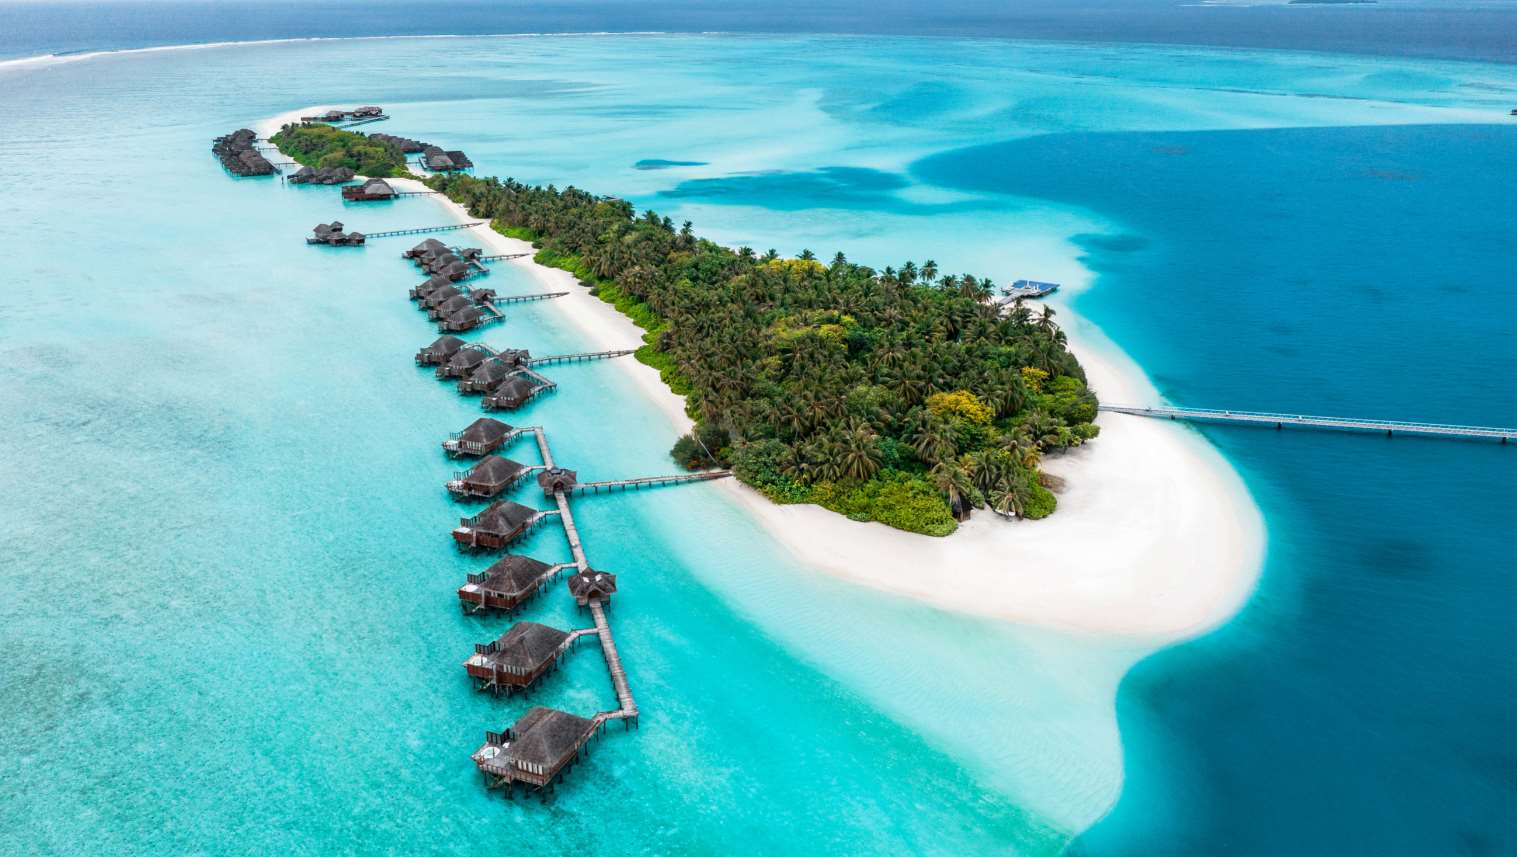 Conrad Maldives Rangali Island – Ari Atoll